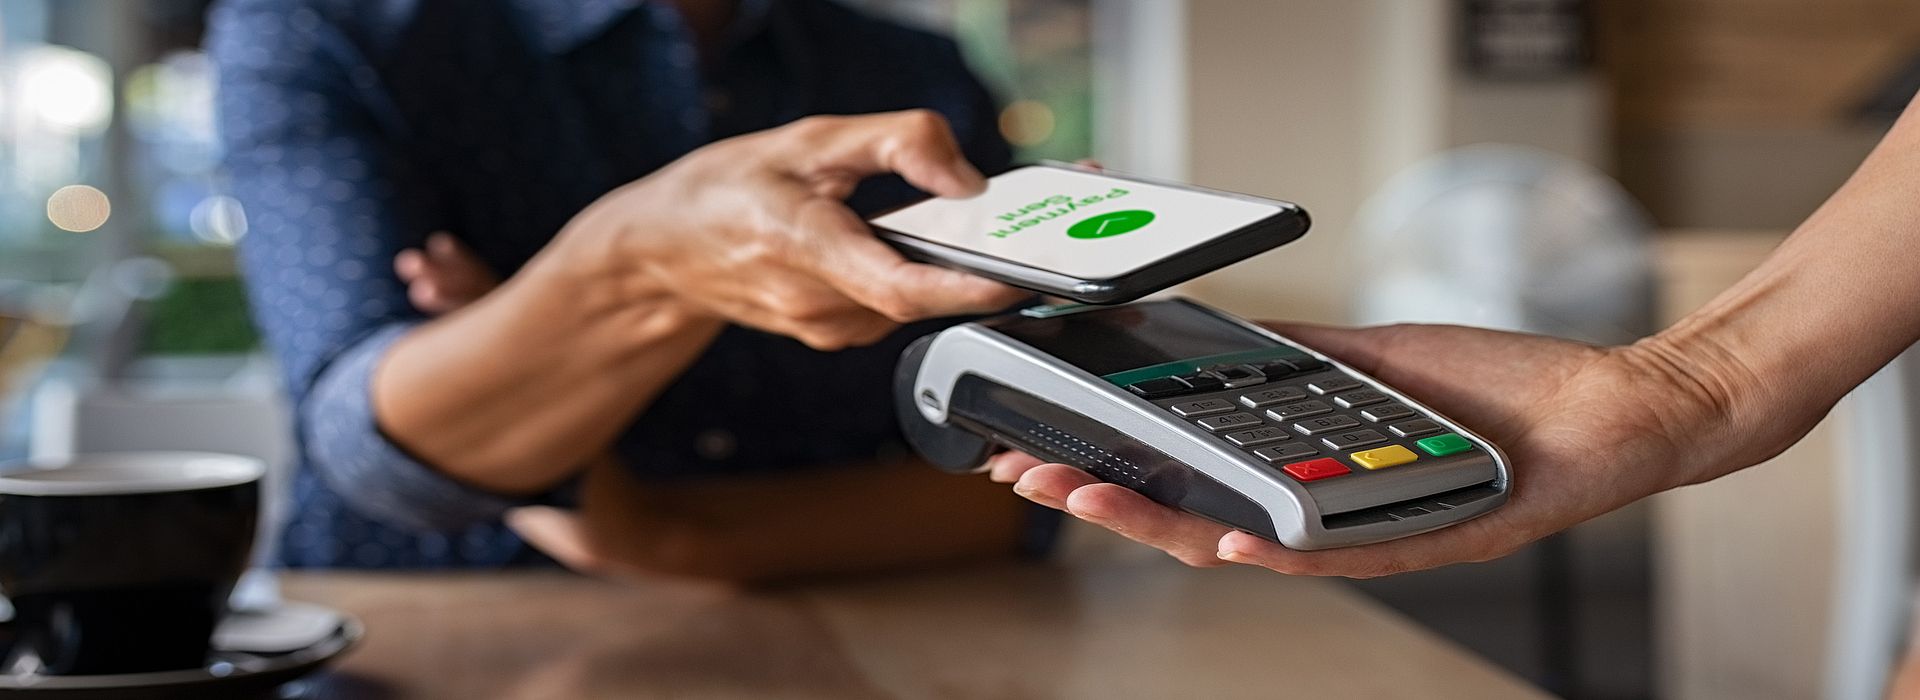 header payment - Digital Ticketscan with Smartphone